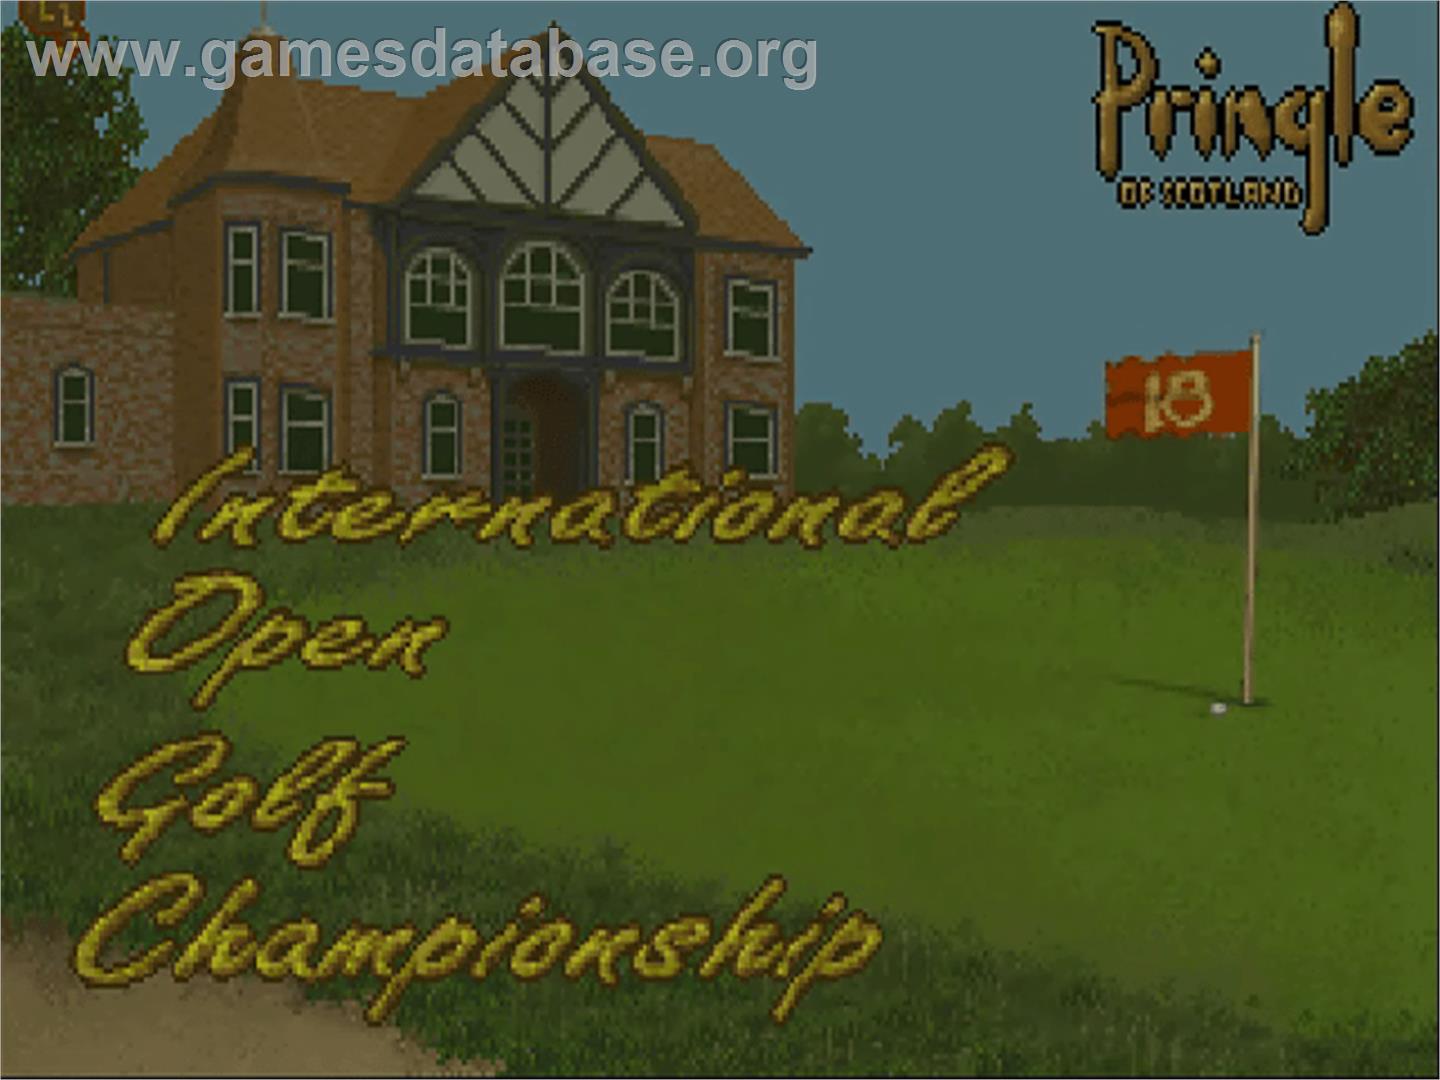 International Open Golf Championship - Commodore Amiga CD32 - Artwork - Title Screen